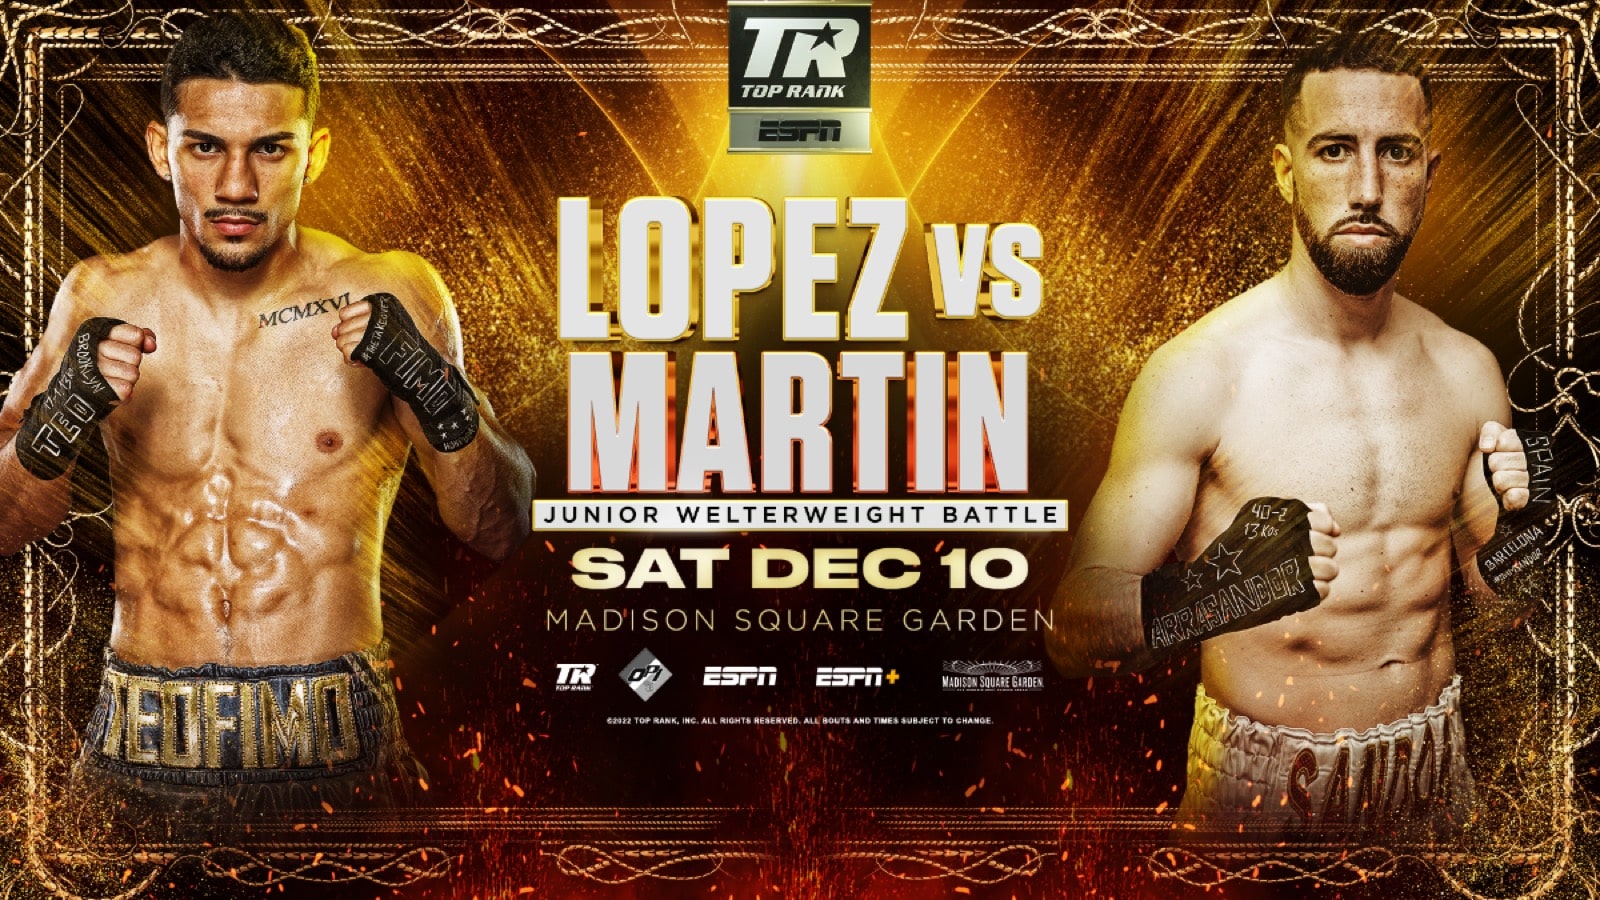 Teofimo Lopez plans to shine against Sandor Martin on Saturday